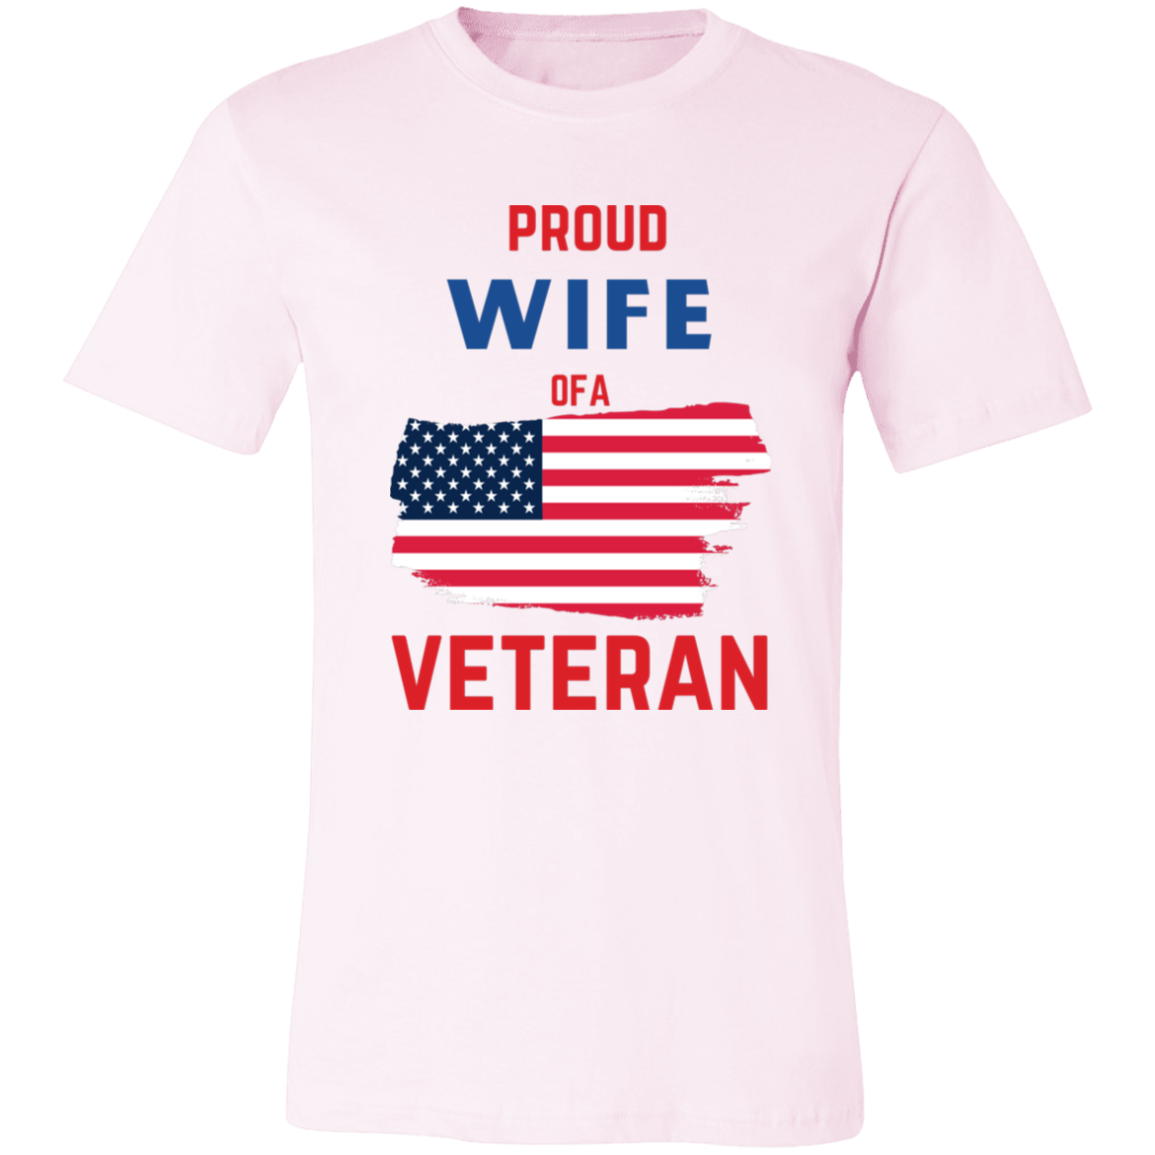 I am a Proud Wife of a Veteran